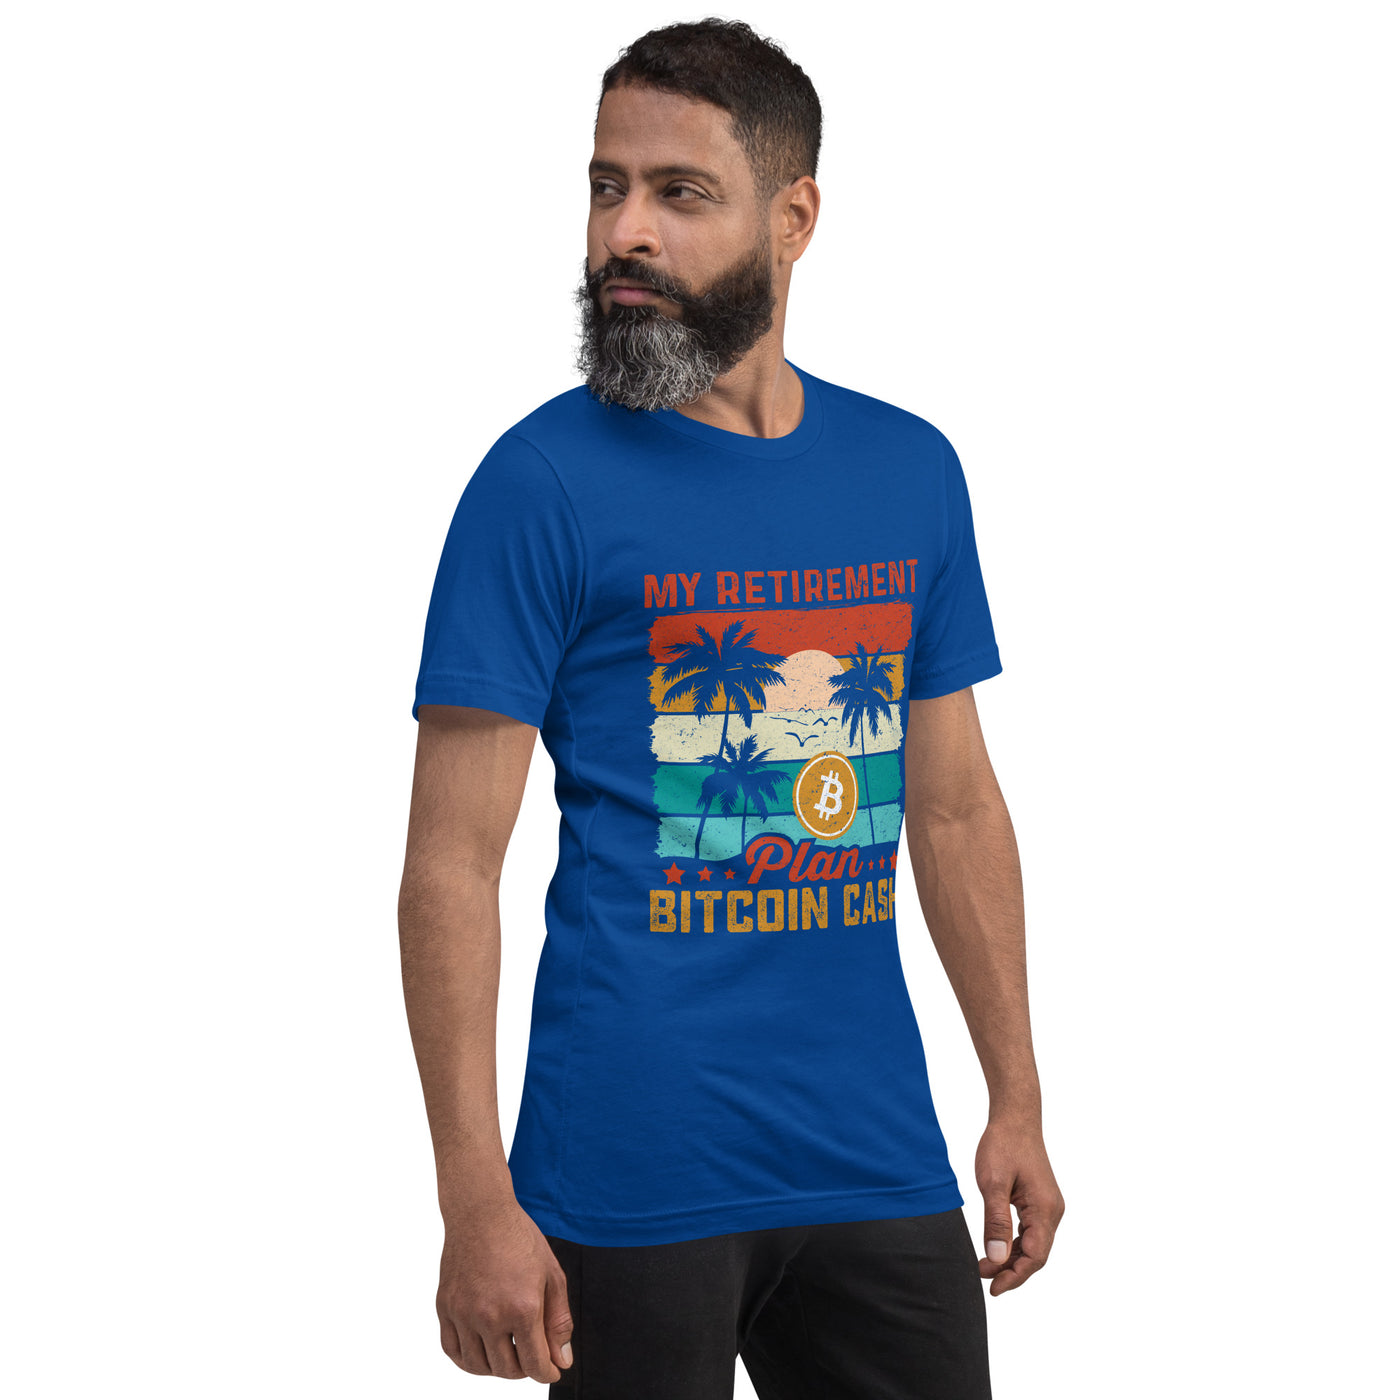 My Retirement Plan: Bitcoin Cash - Unisex t-shirt